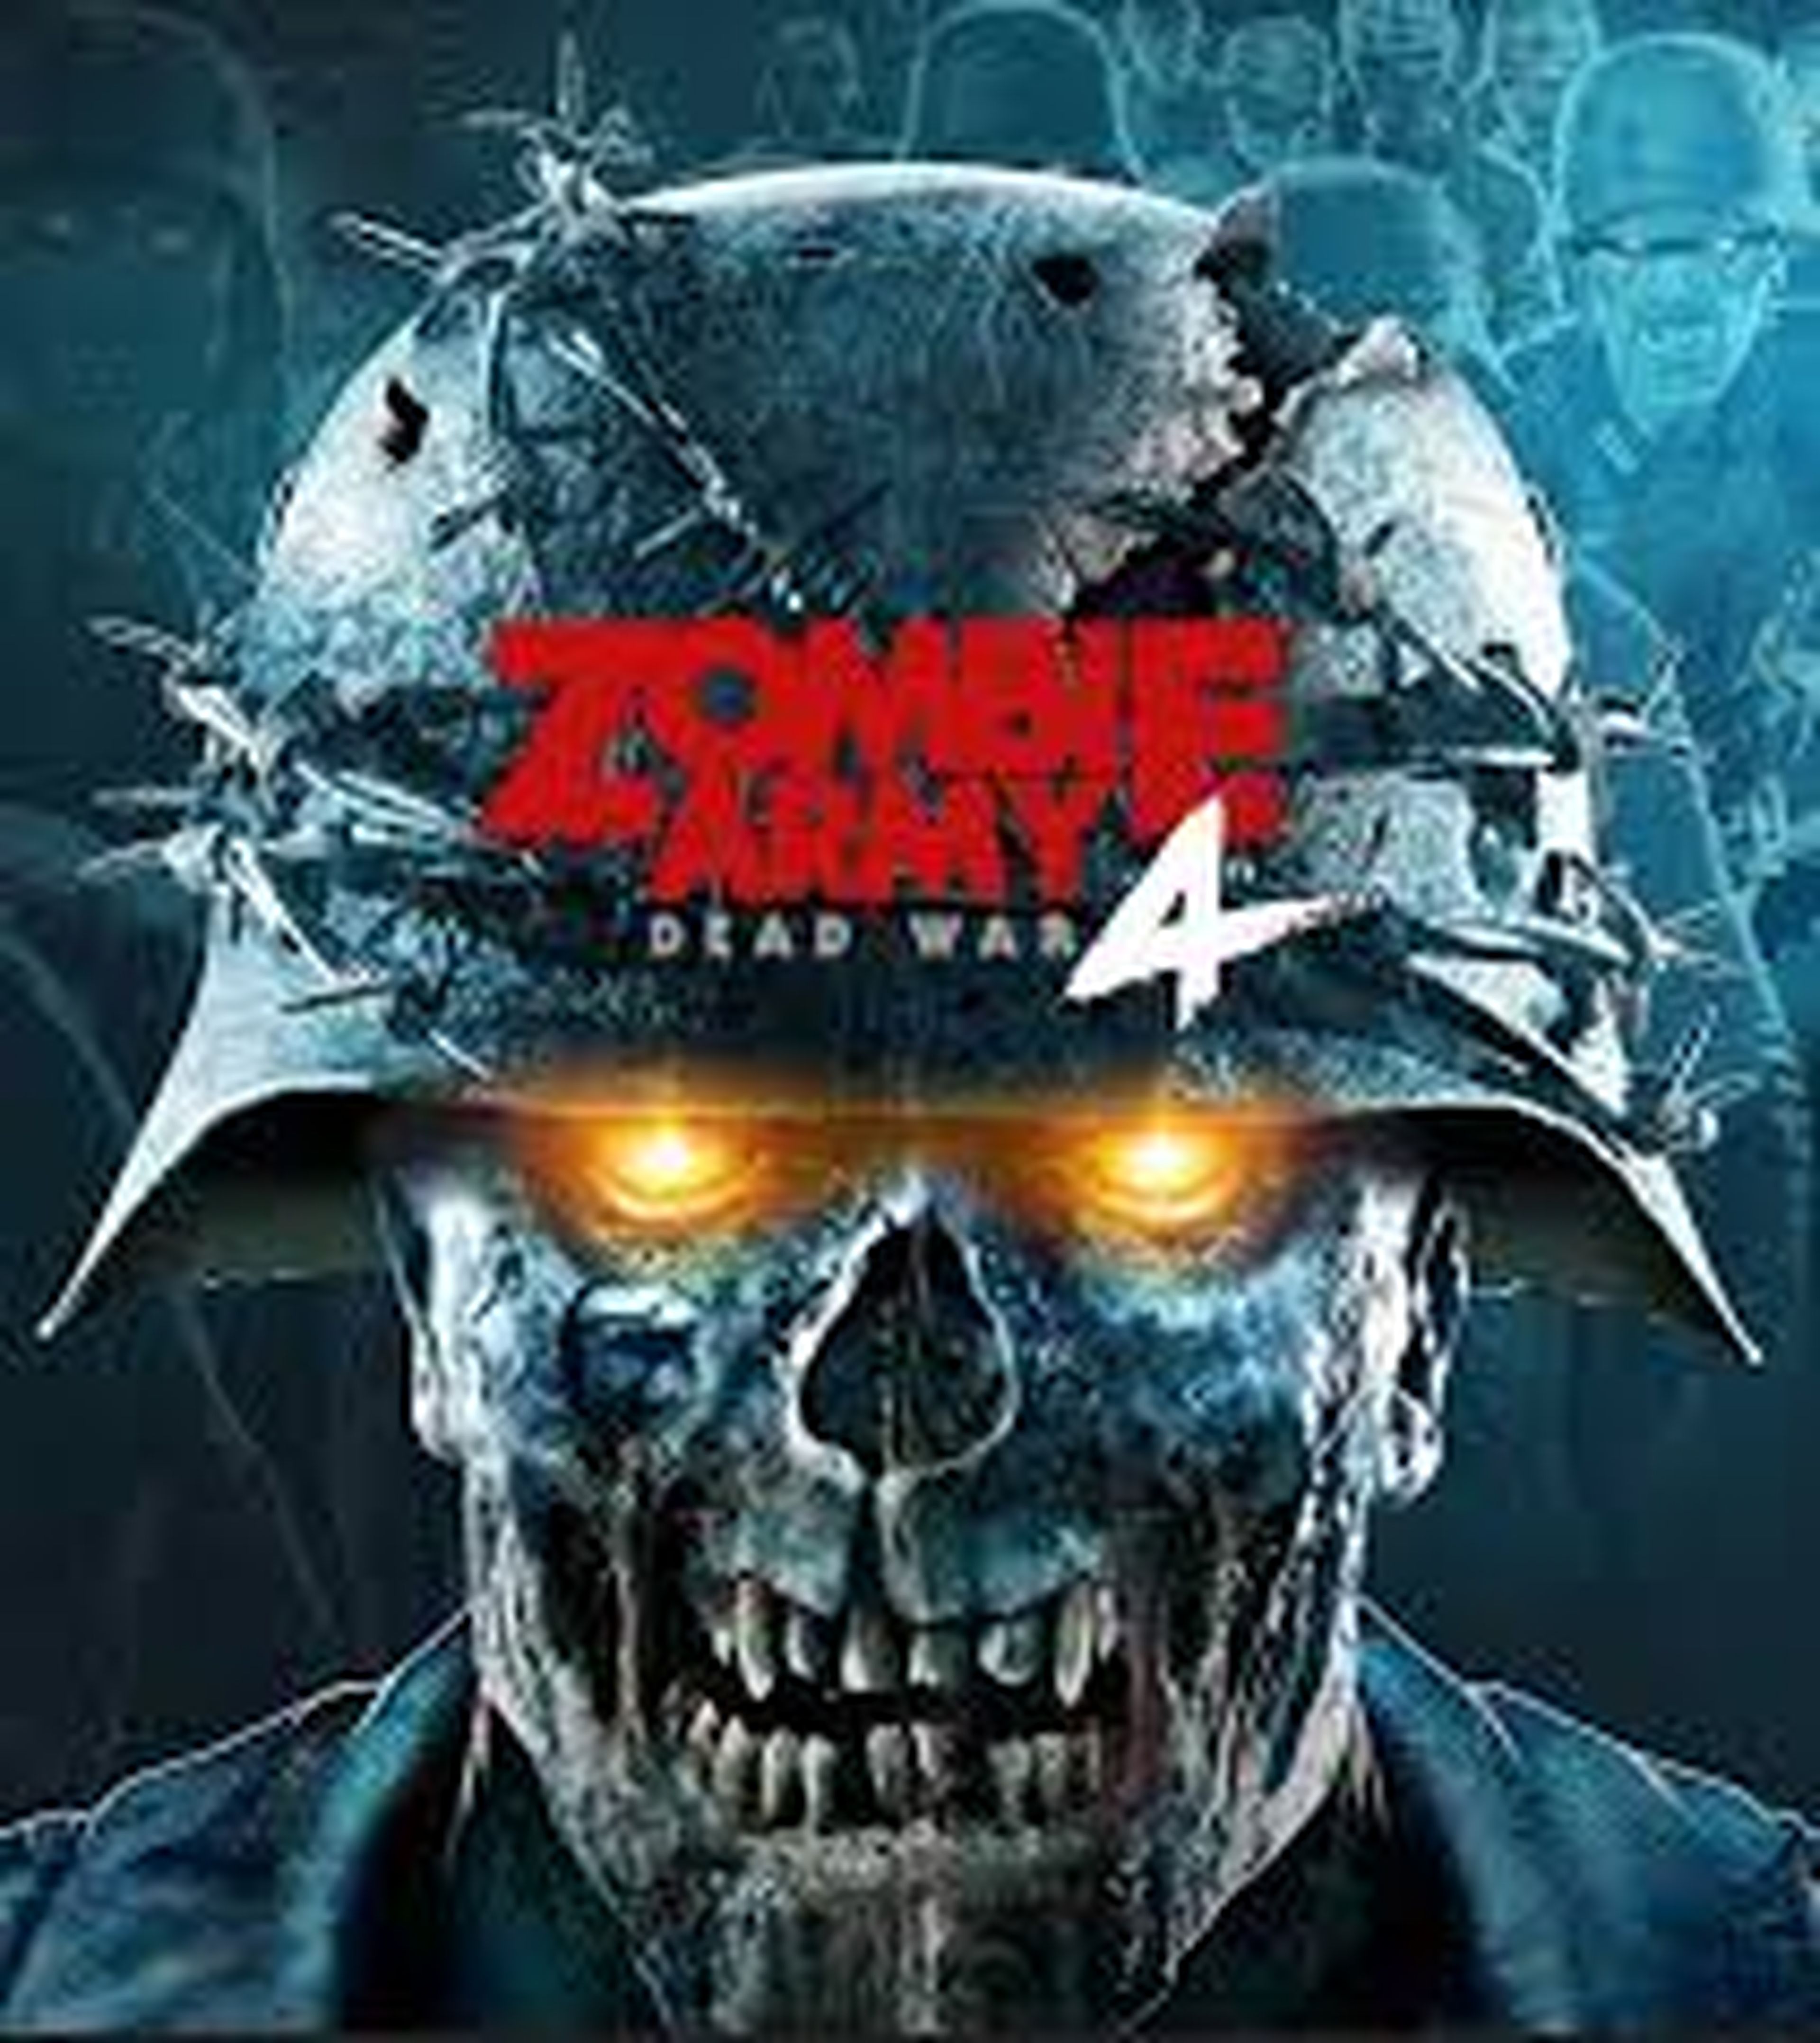 caratula zombie army 4